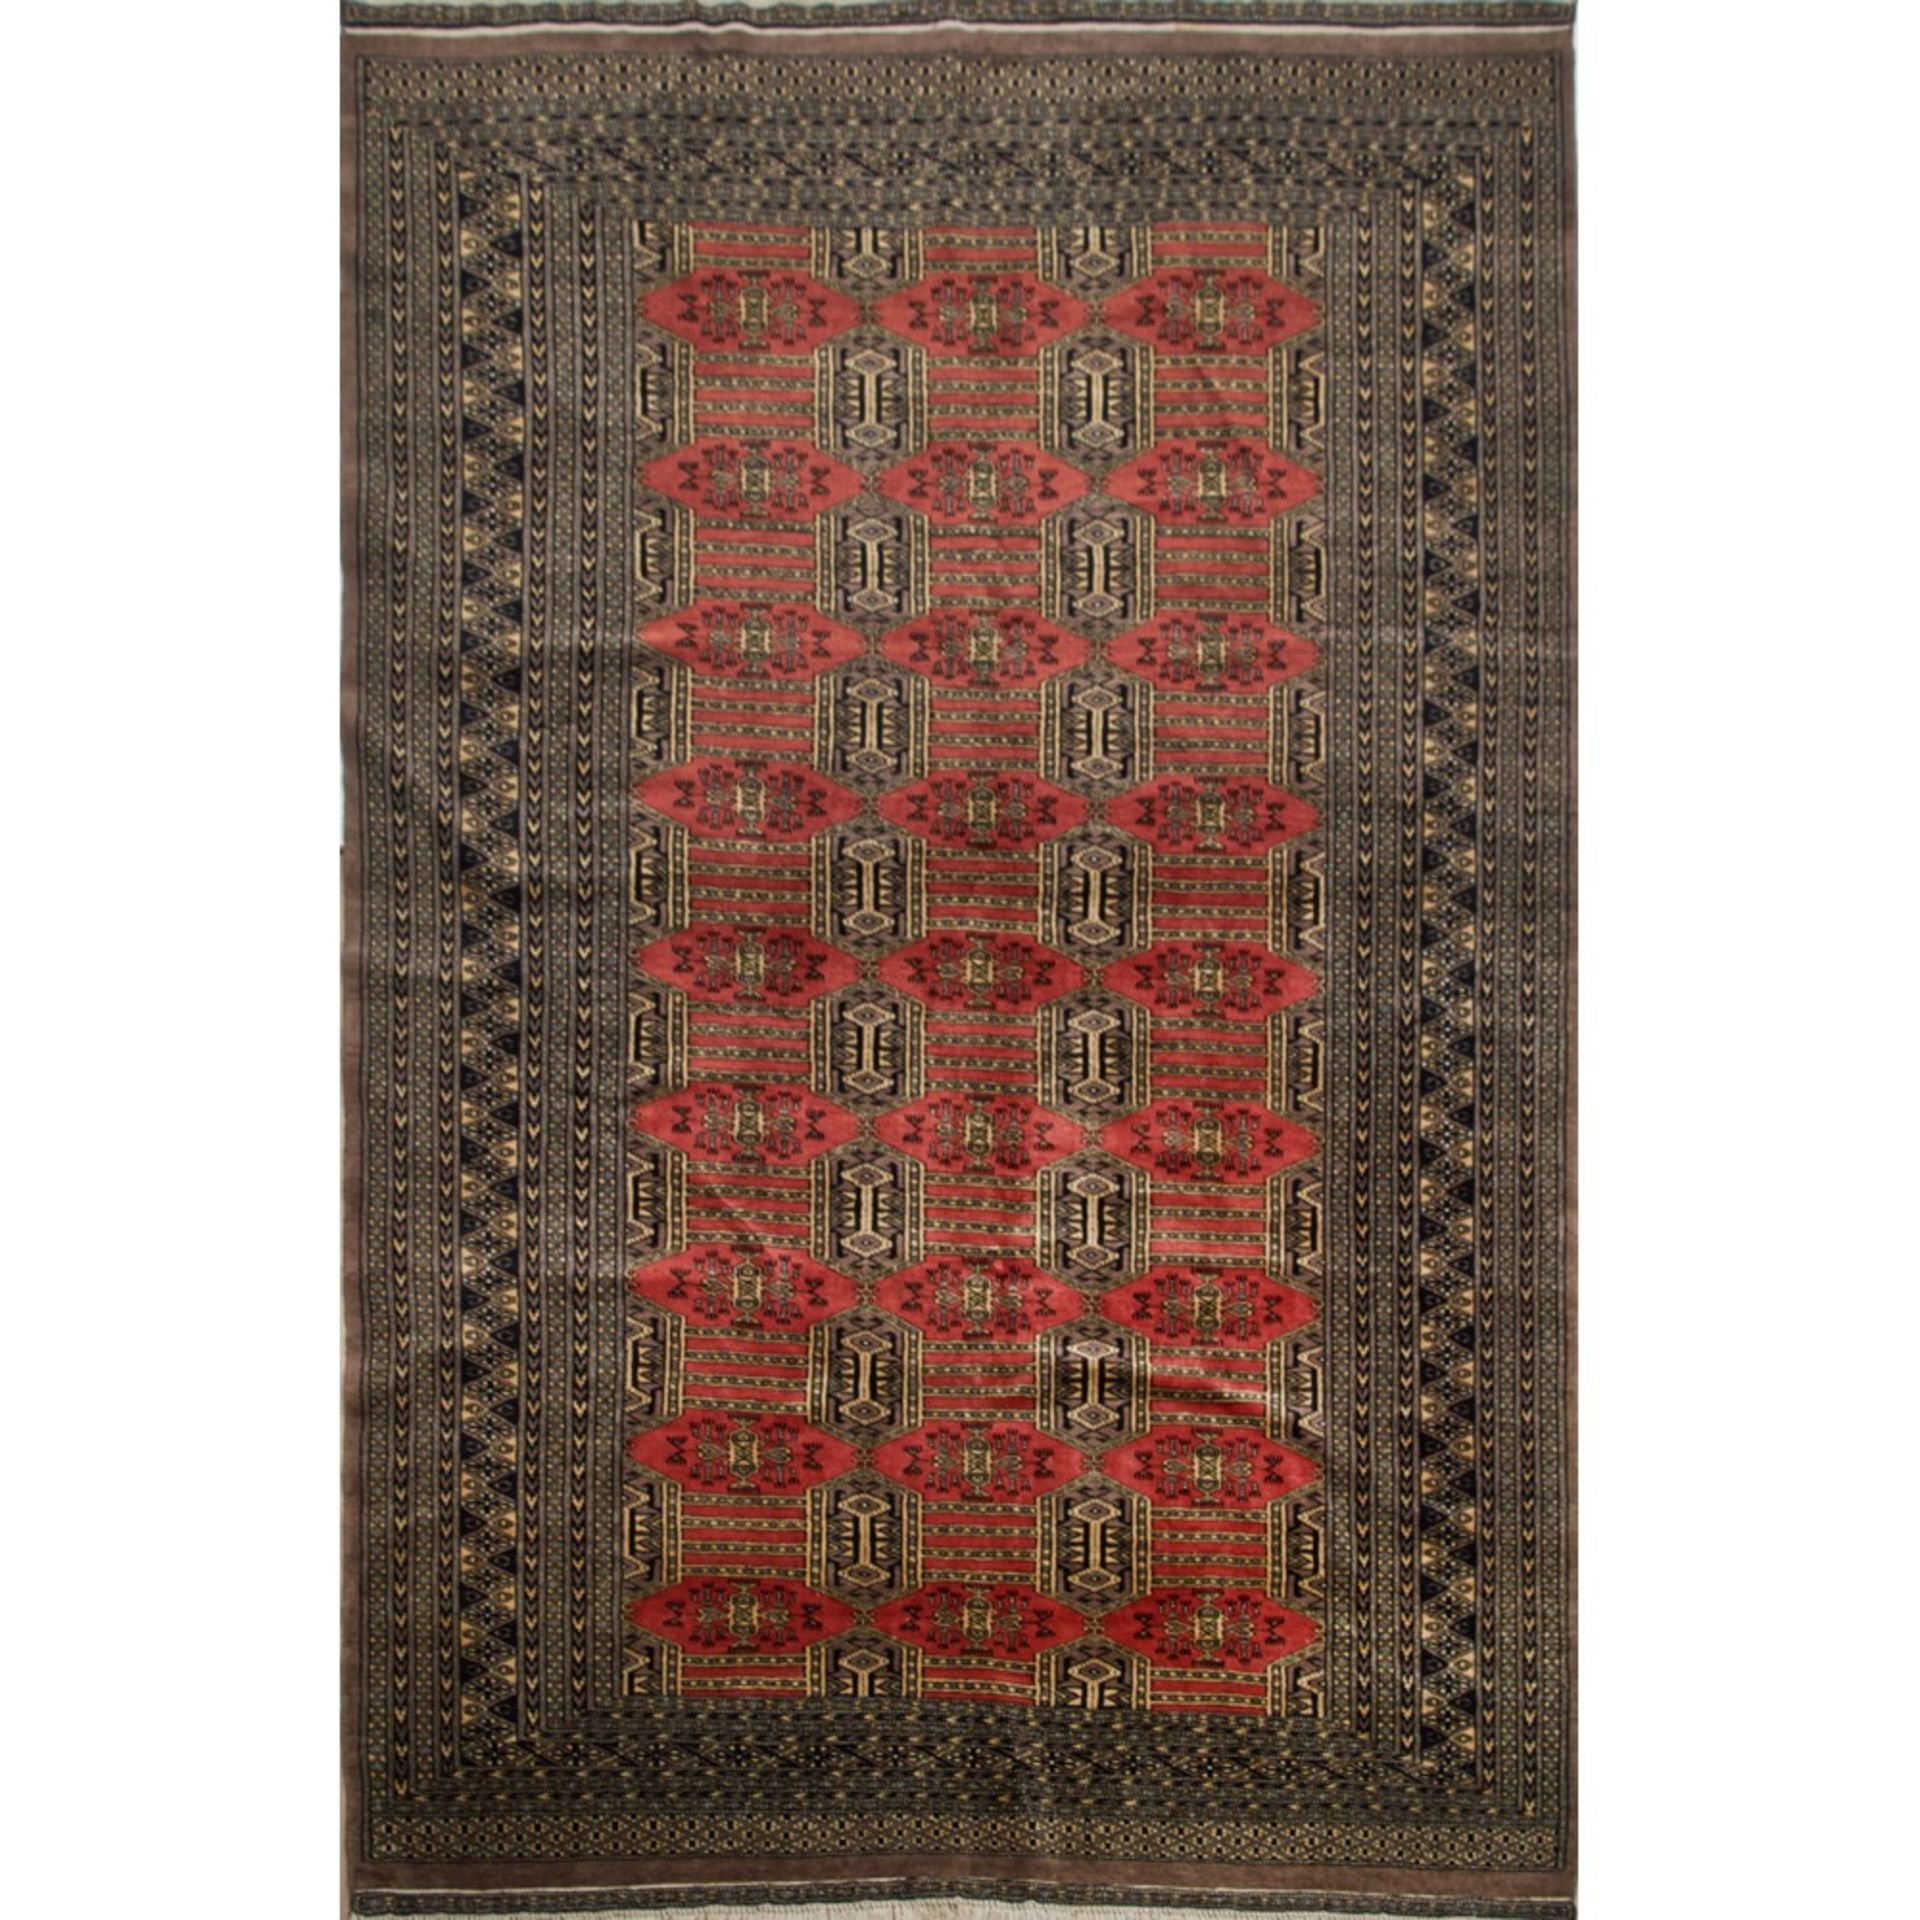 TAPPETO KASHMIR BOKARA trama ed ordito in cotone, vello in lana. Pakistan XX secolo - cm 251 x 170